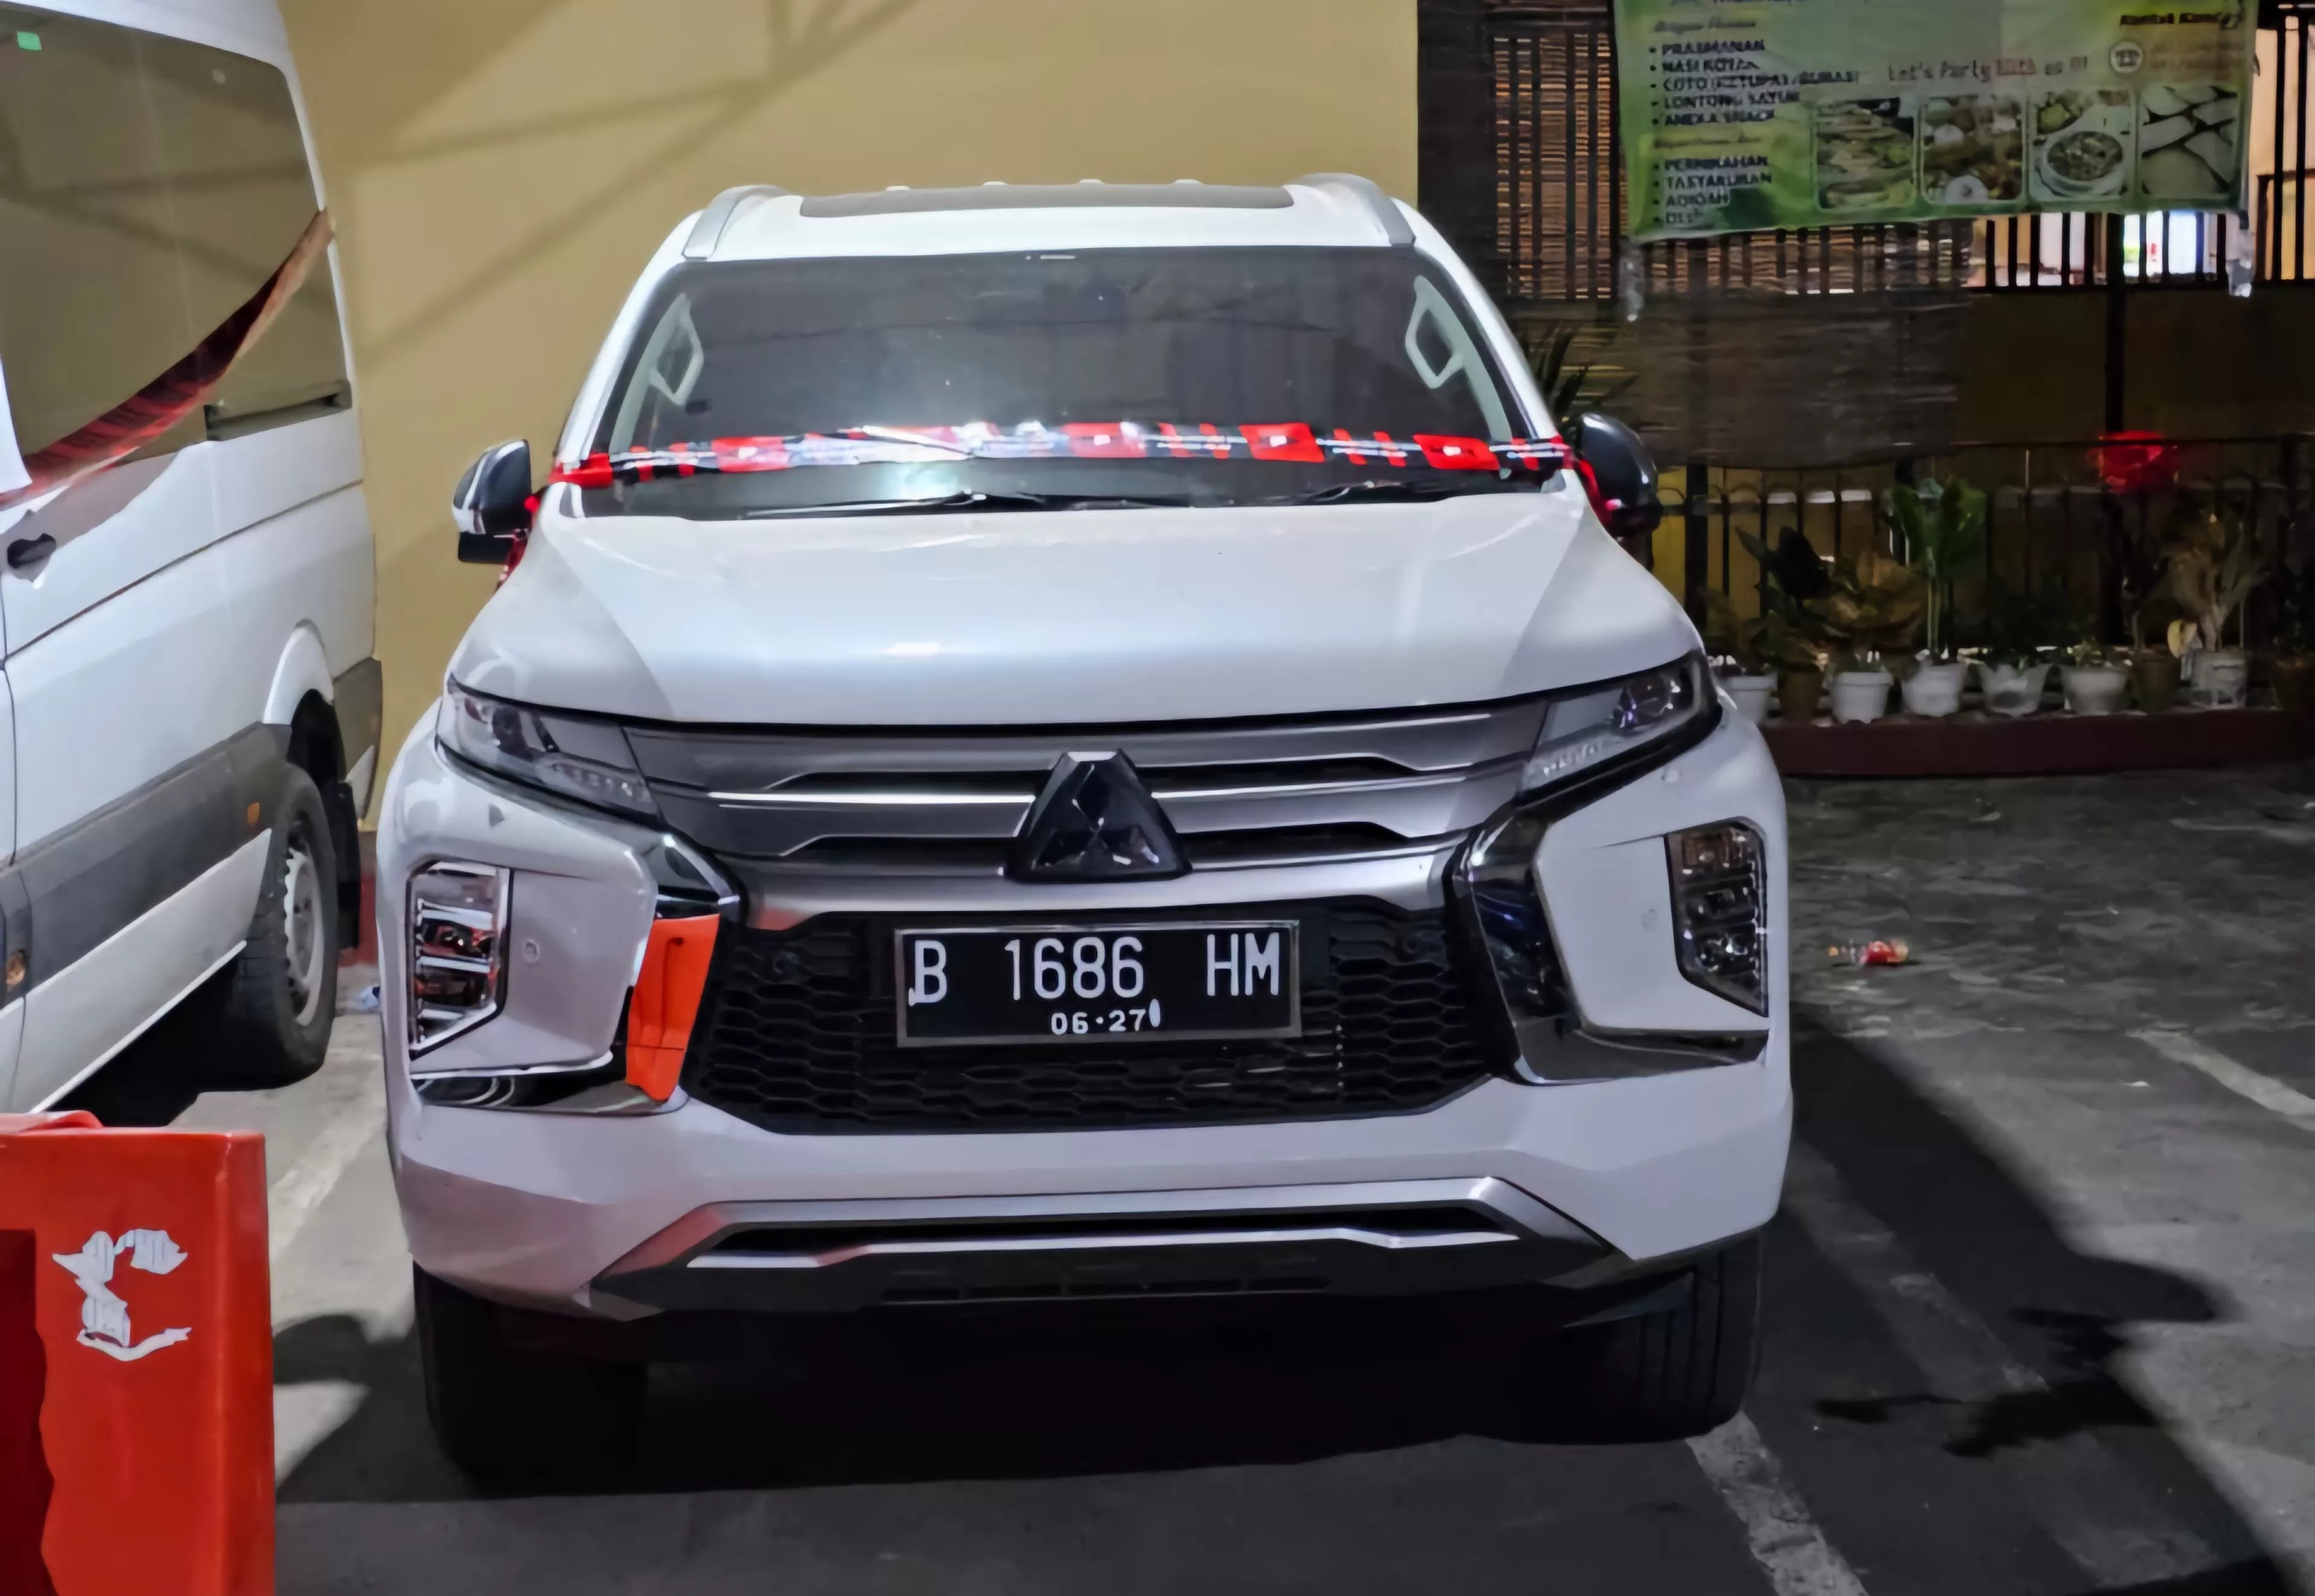 Telusuri Pencucian Uang SYL, KPK Sita Mobil Pajero Sport yang Sengaja Disembunyikan di Makassar